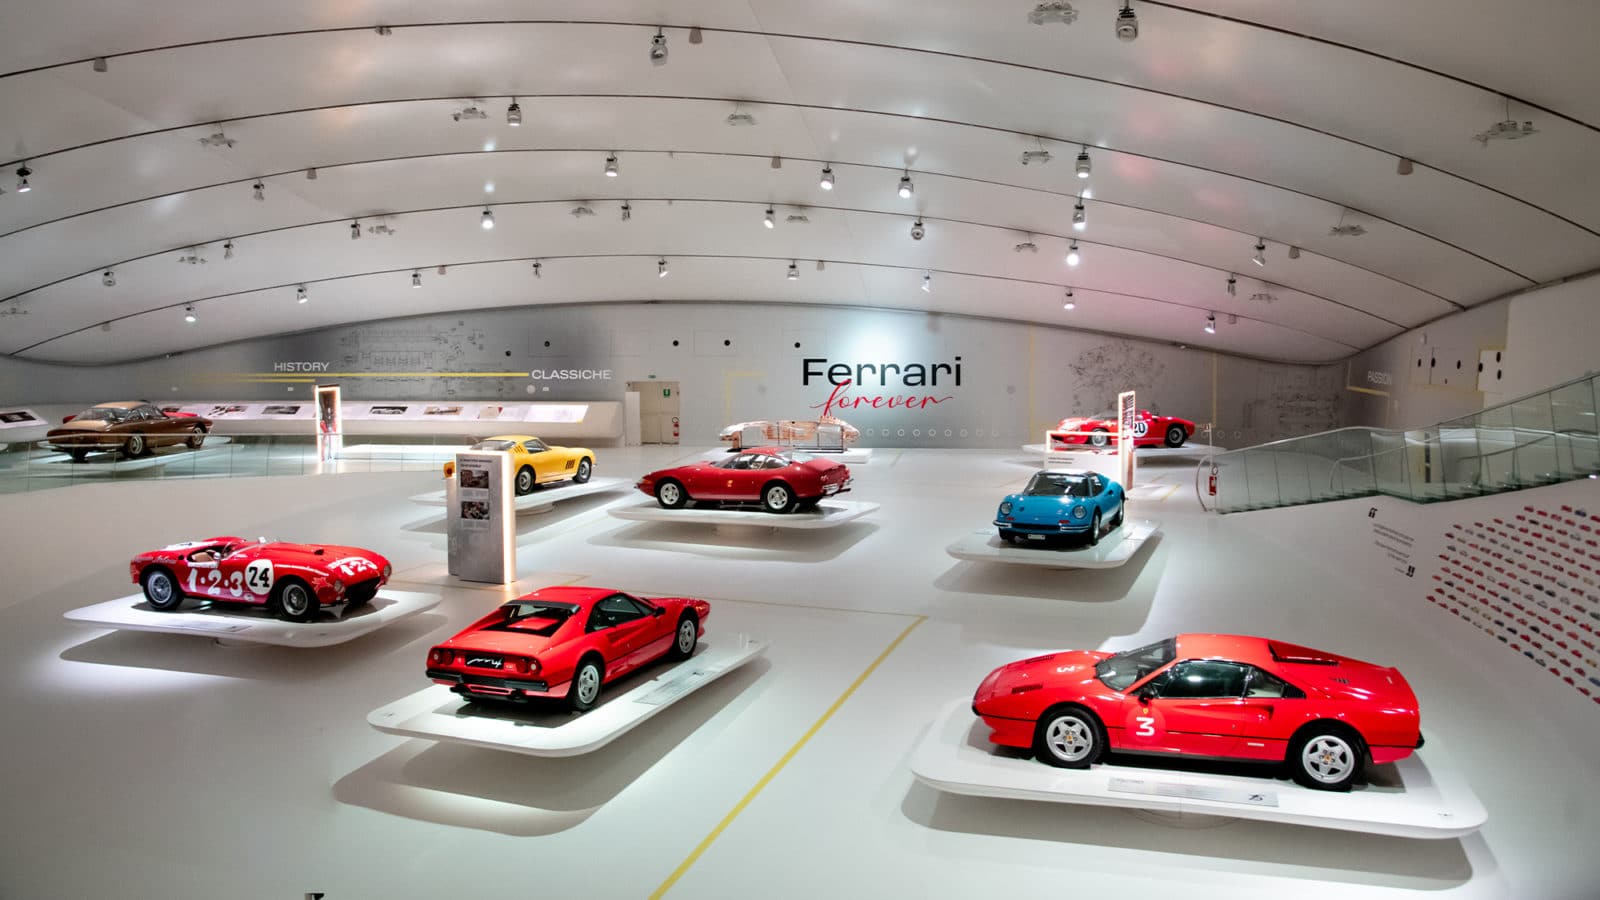 Ferrari Forever exhibition